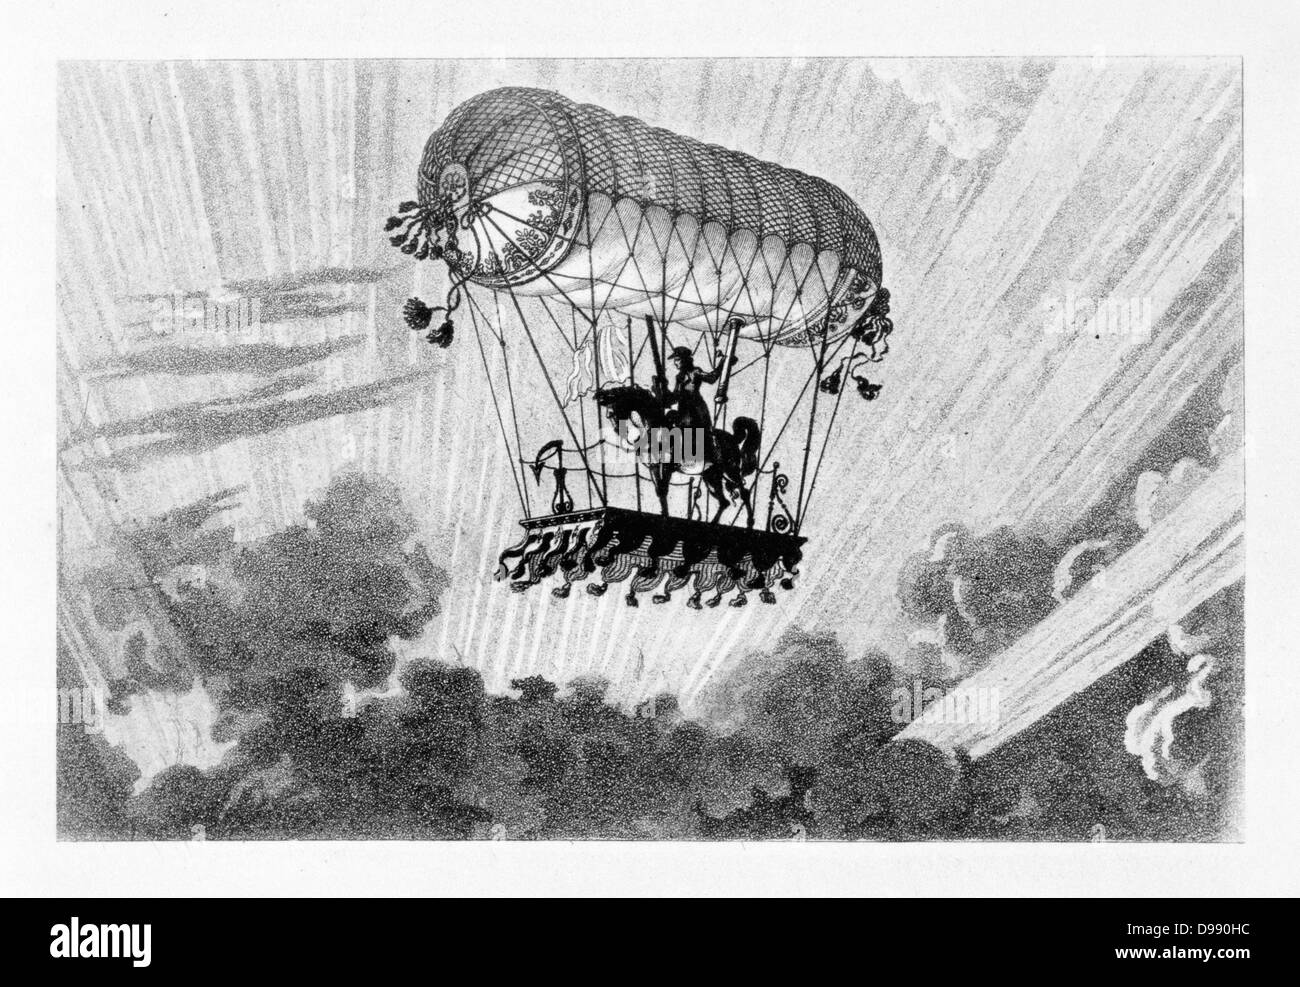 Ballooning fantasy: Idea for balloon carrying a mounted horseman. From 'Histoire des Ballons' by Gaston Tissandier, Paris, 1887. Aviation Aeronautics Stock Photo